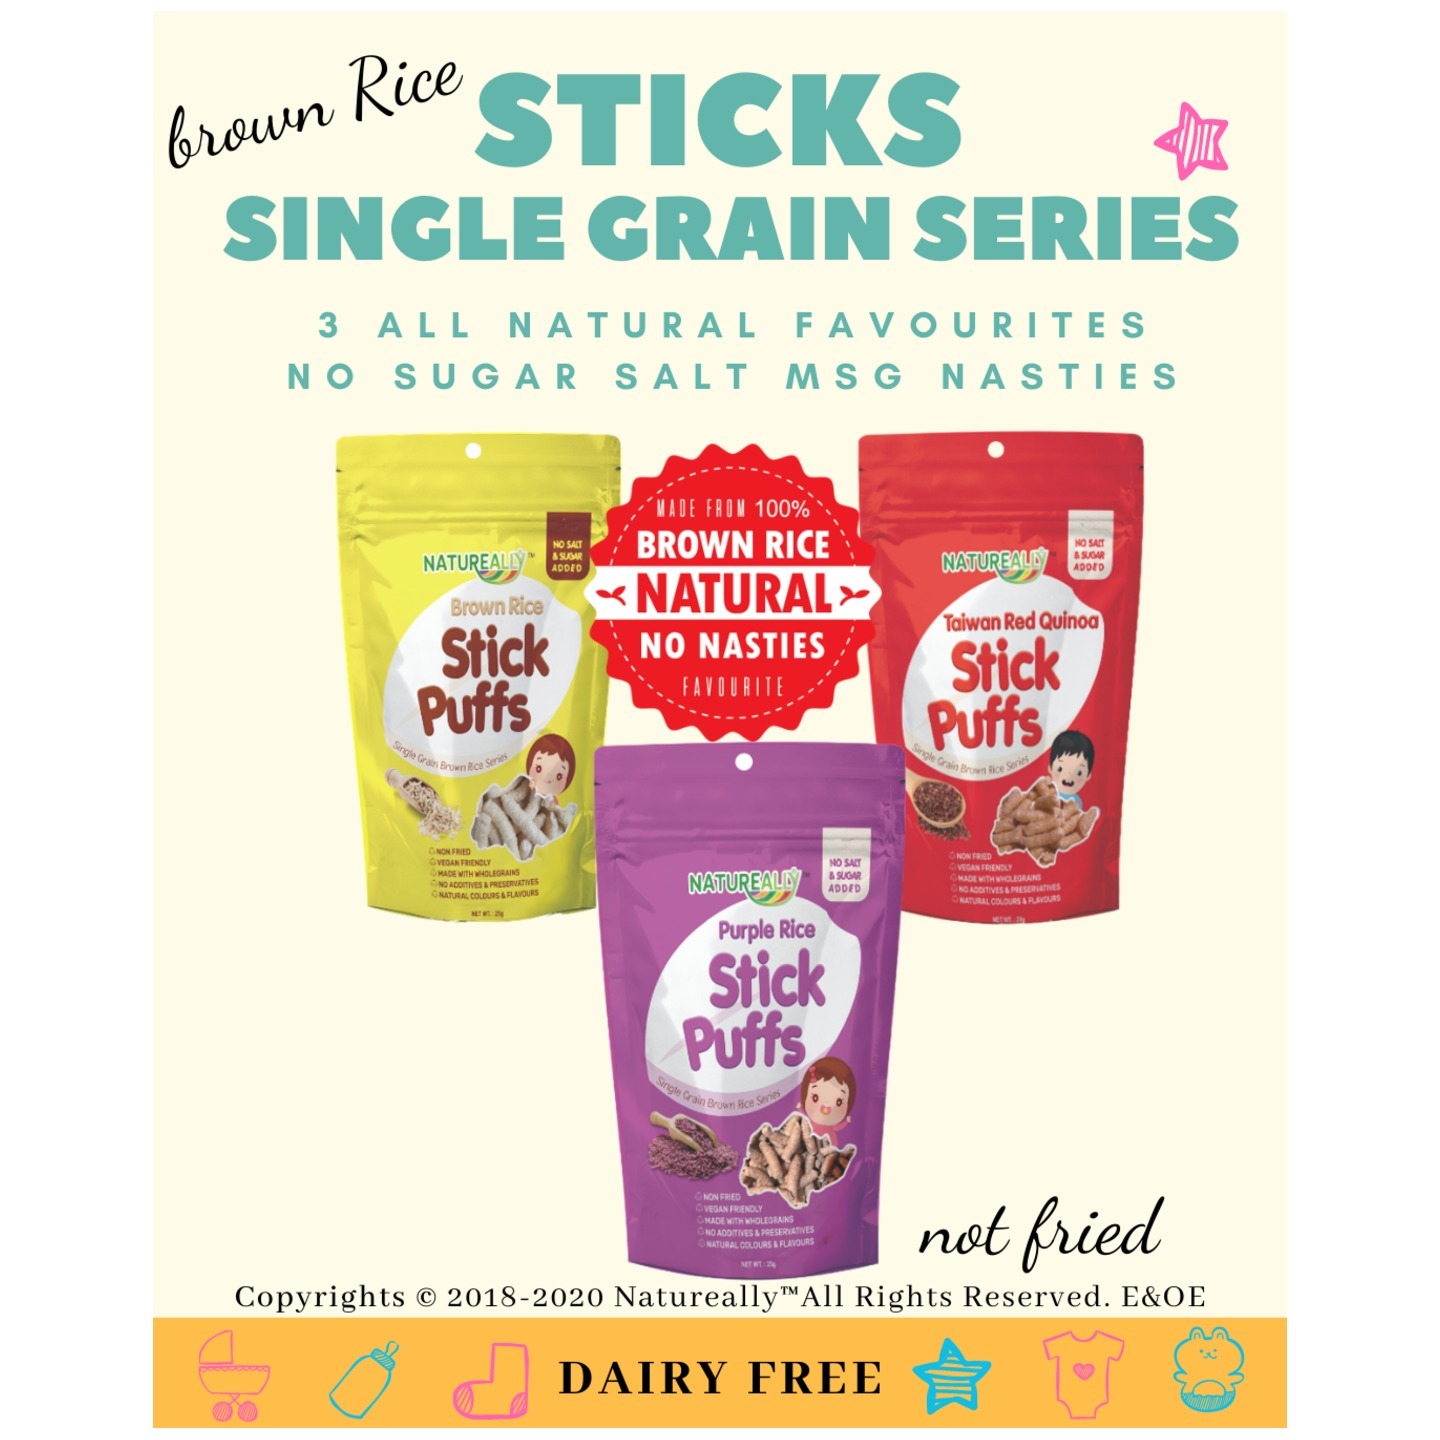 NATUREALLY ™ Original Brown Rice Single Grain Series STICK Puffs (No Sugar, Salt, MSG and Oil Added)